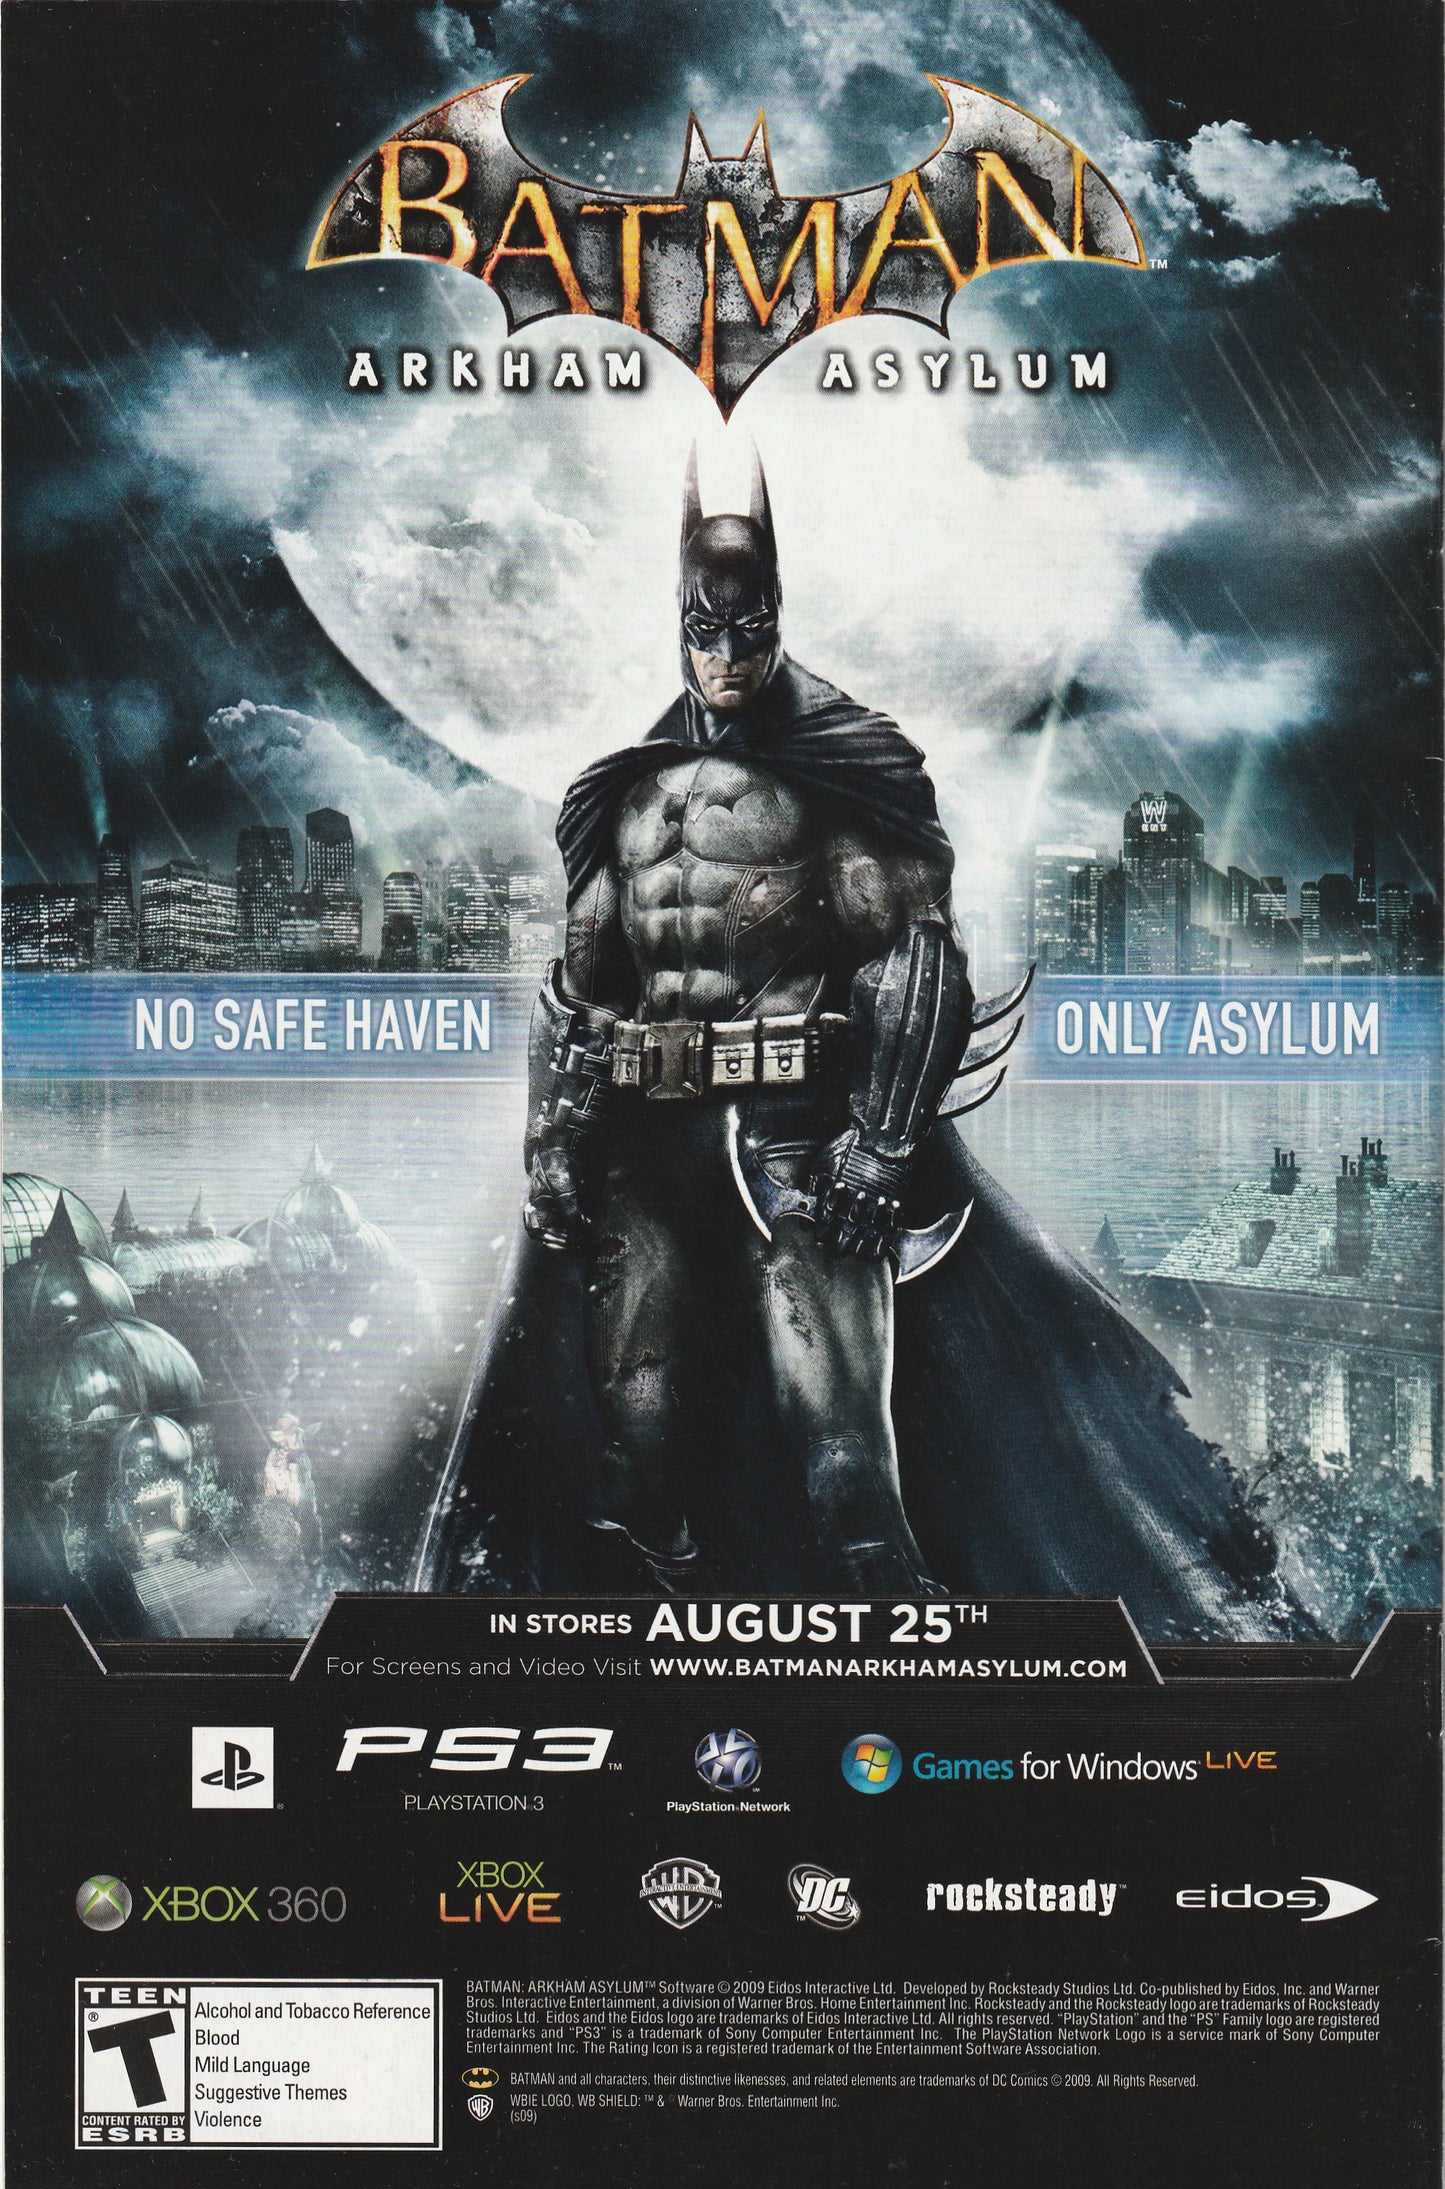 Batman #689 (2009) - Batman Reborn